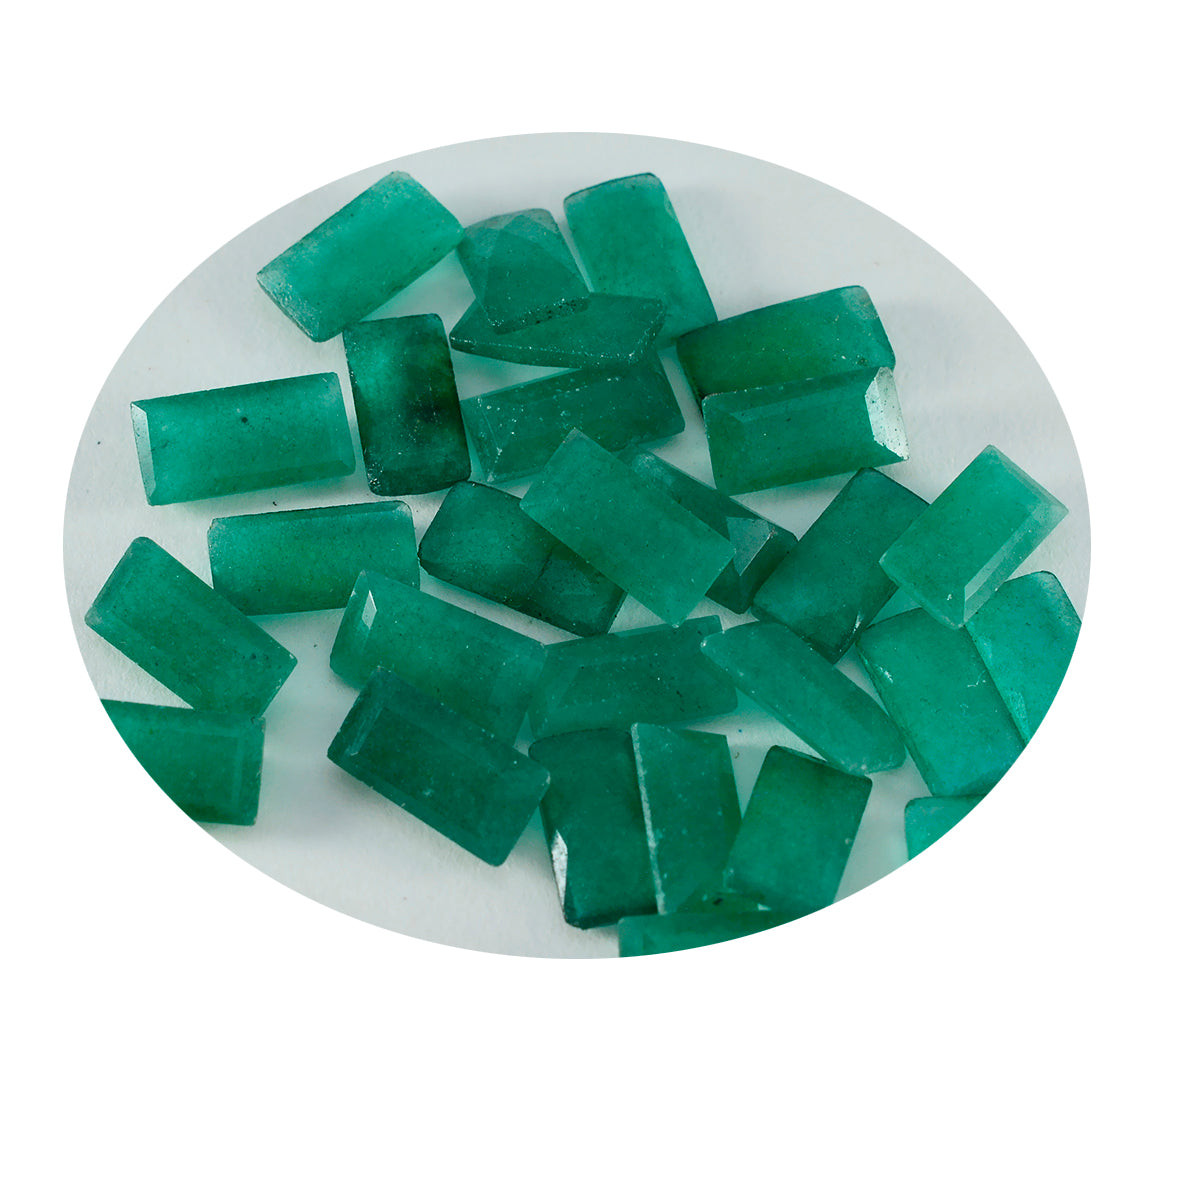 Riyogems 1 Stück echter grüner Jaspis, facettiert, 3 x 6 mm, Baguette-Form, süßer, hochwertiger, loser Edelstein